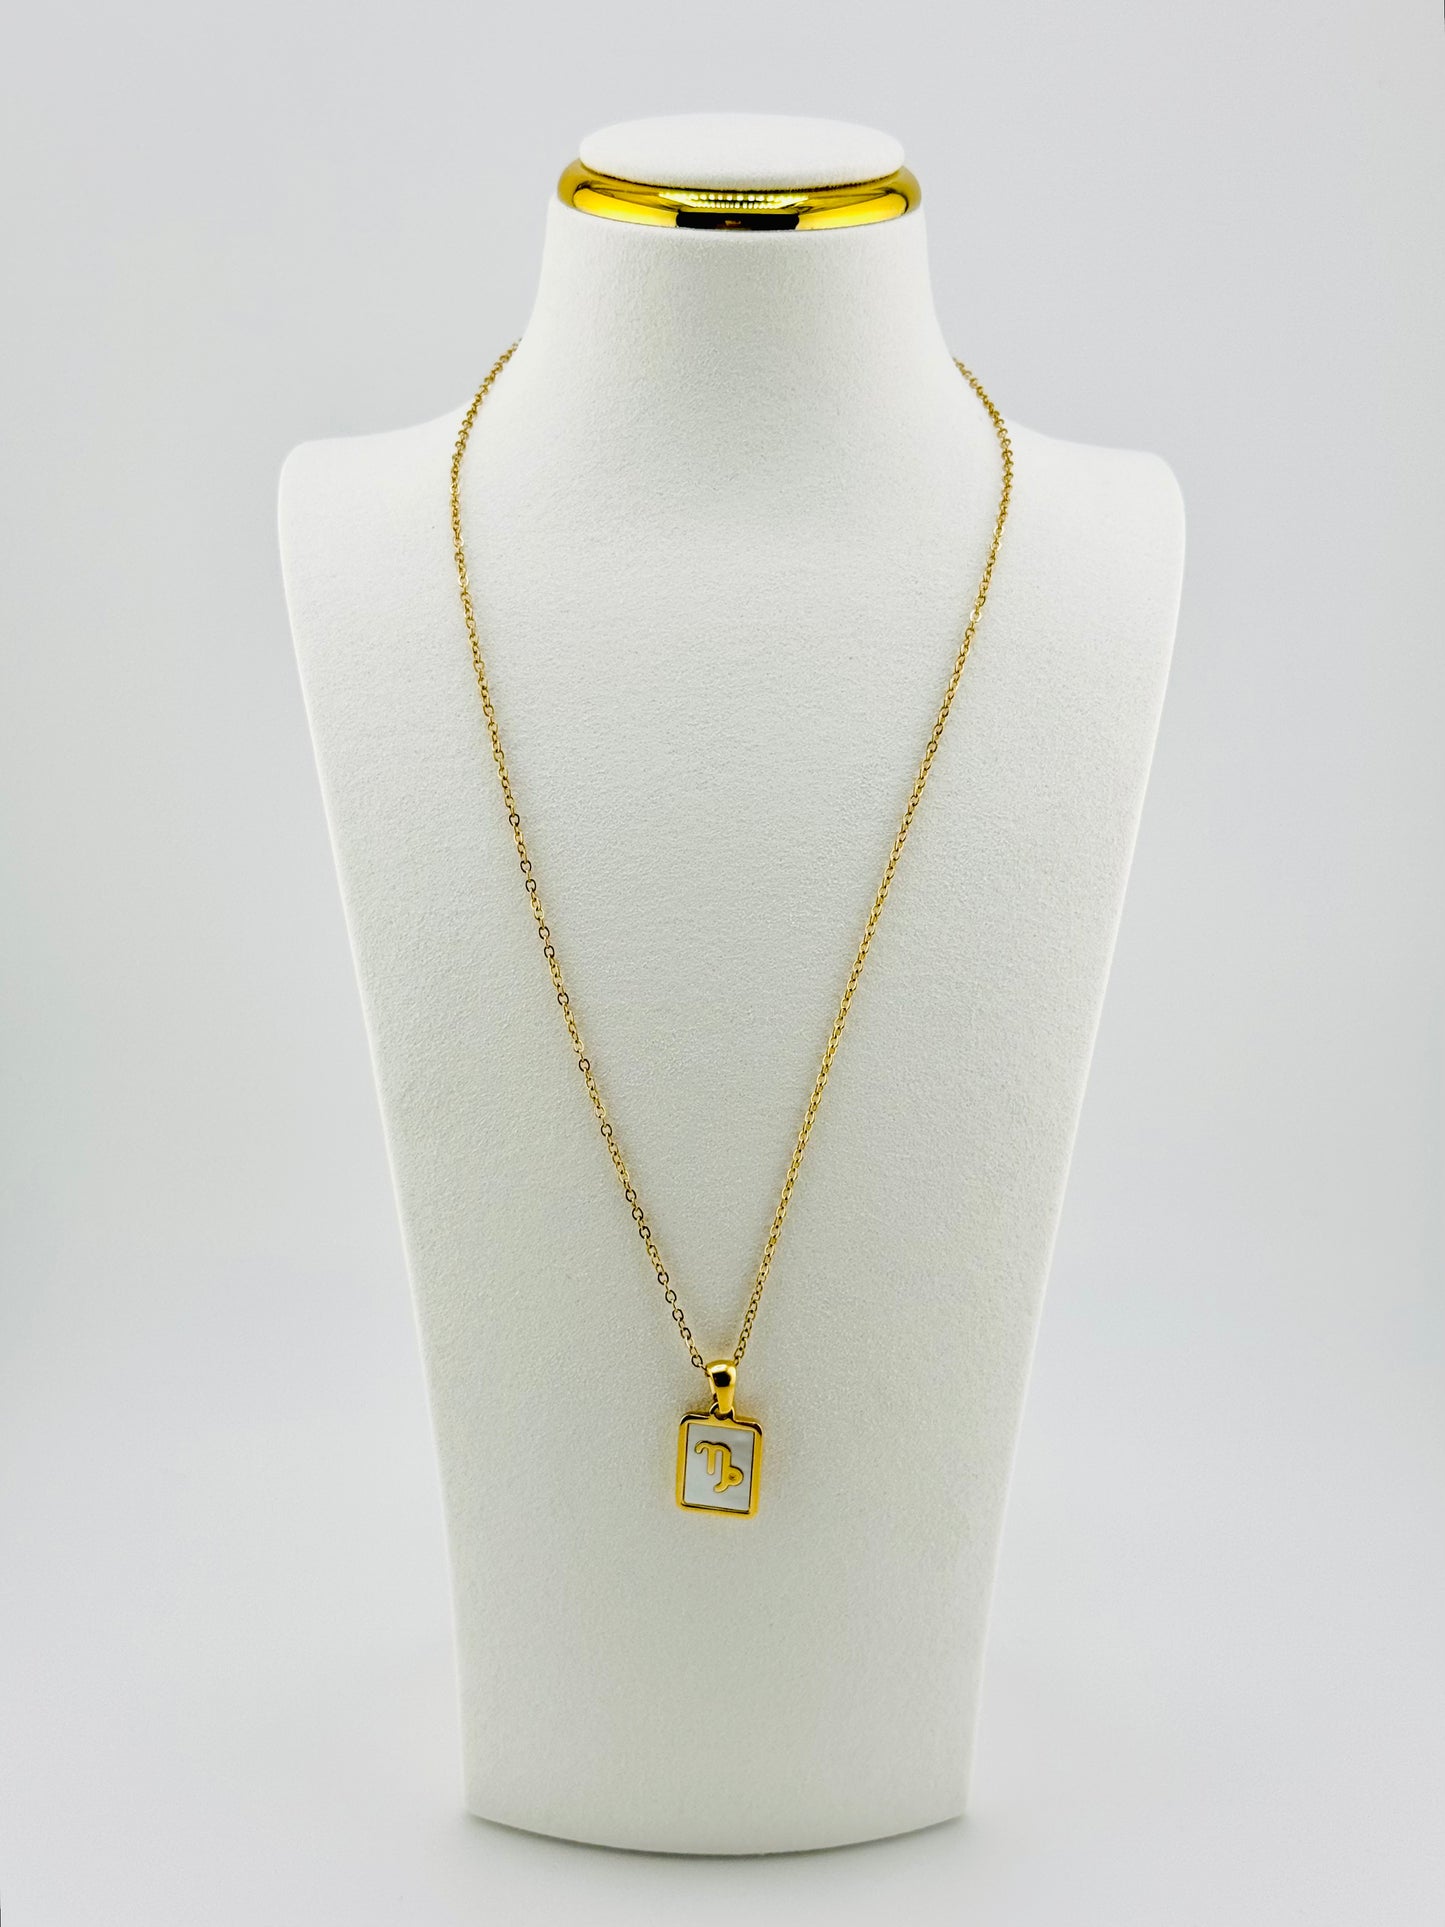 Capricorn gold filled zodiac sign necklace